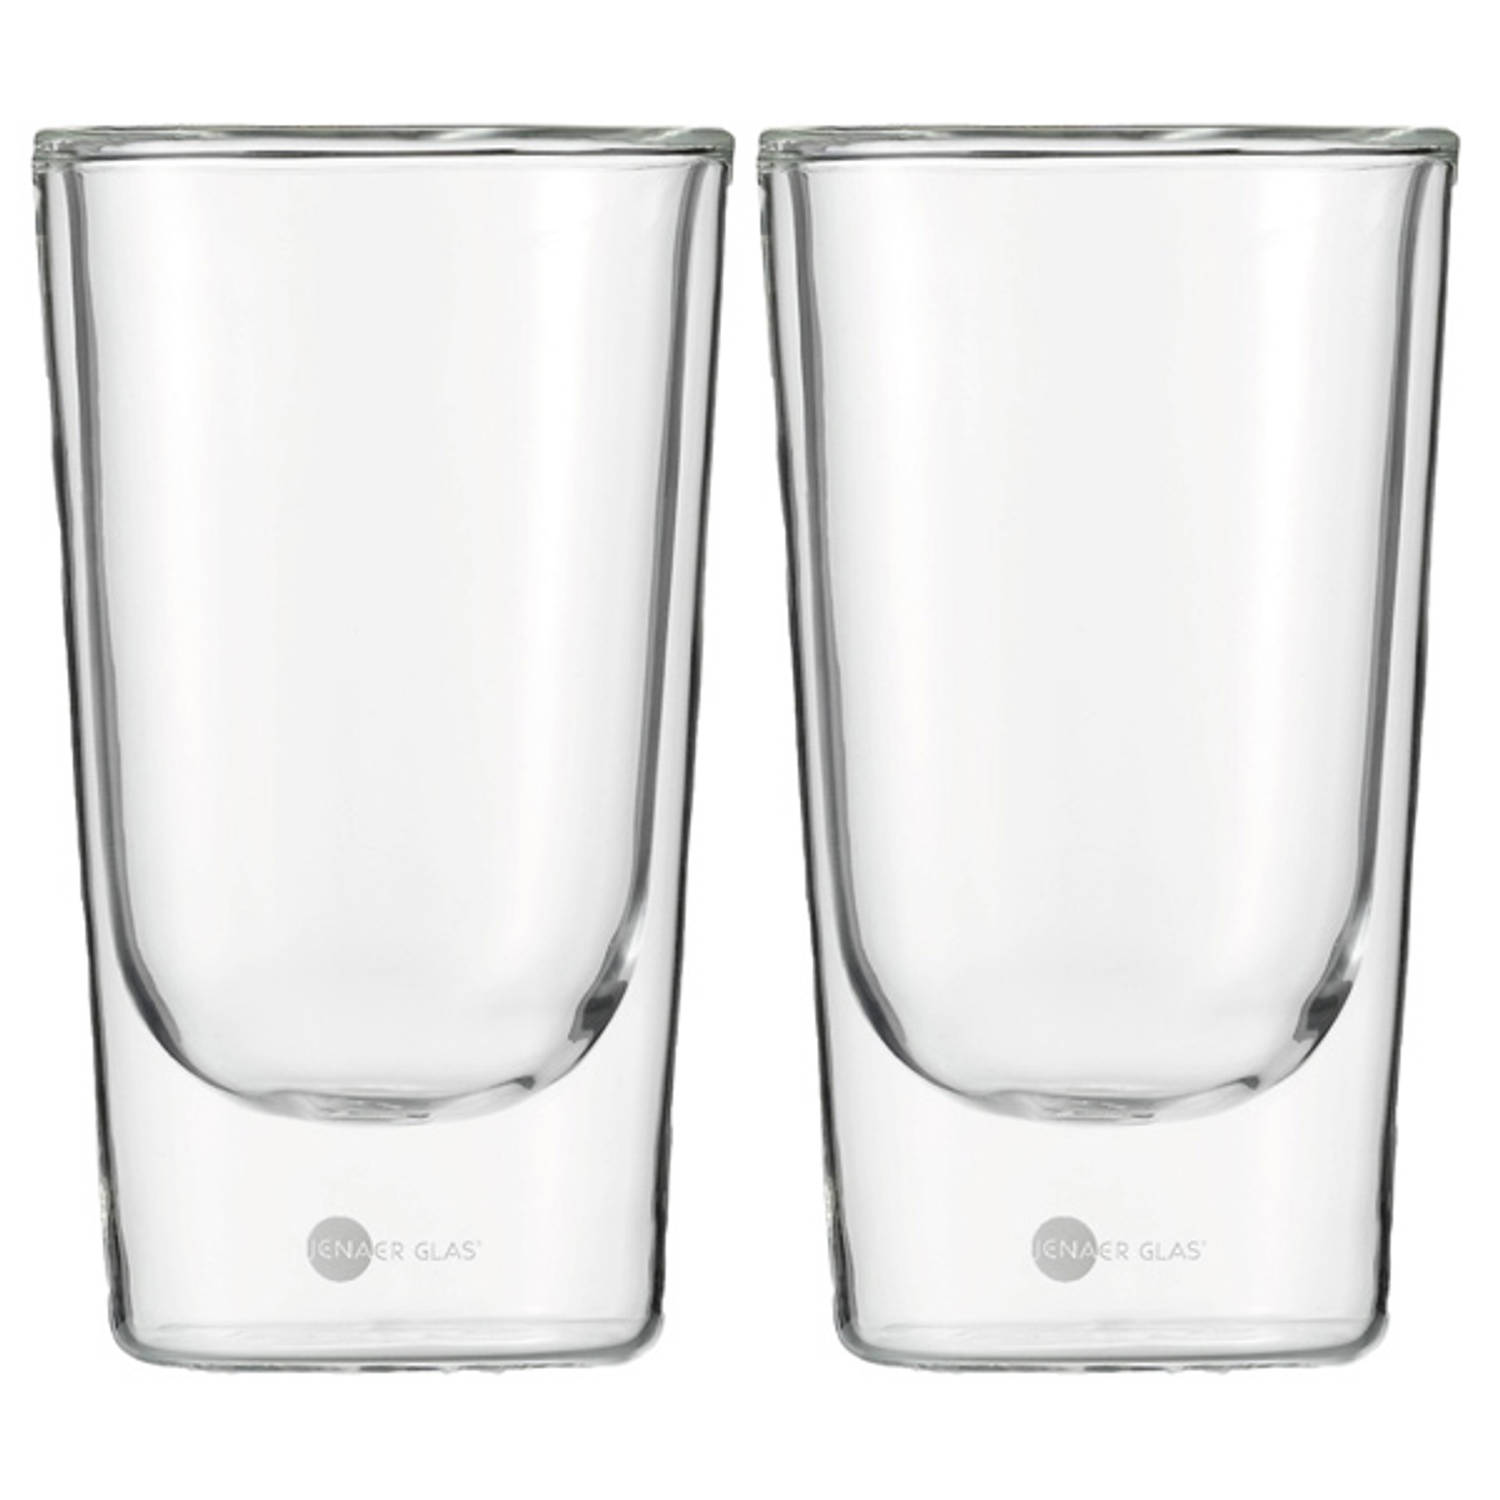 Jenaer Glas Hot'n Cool, Beker 0,35ltr 2 stuks